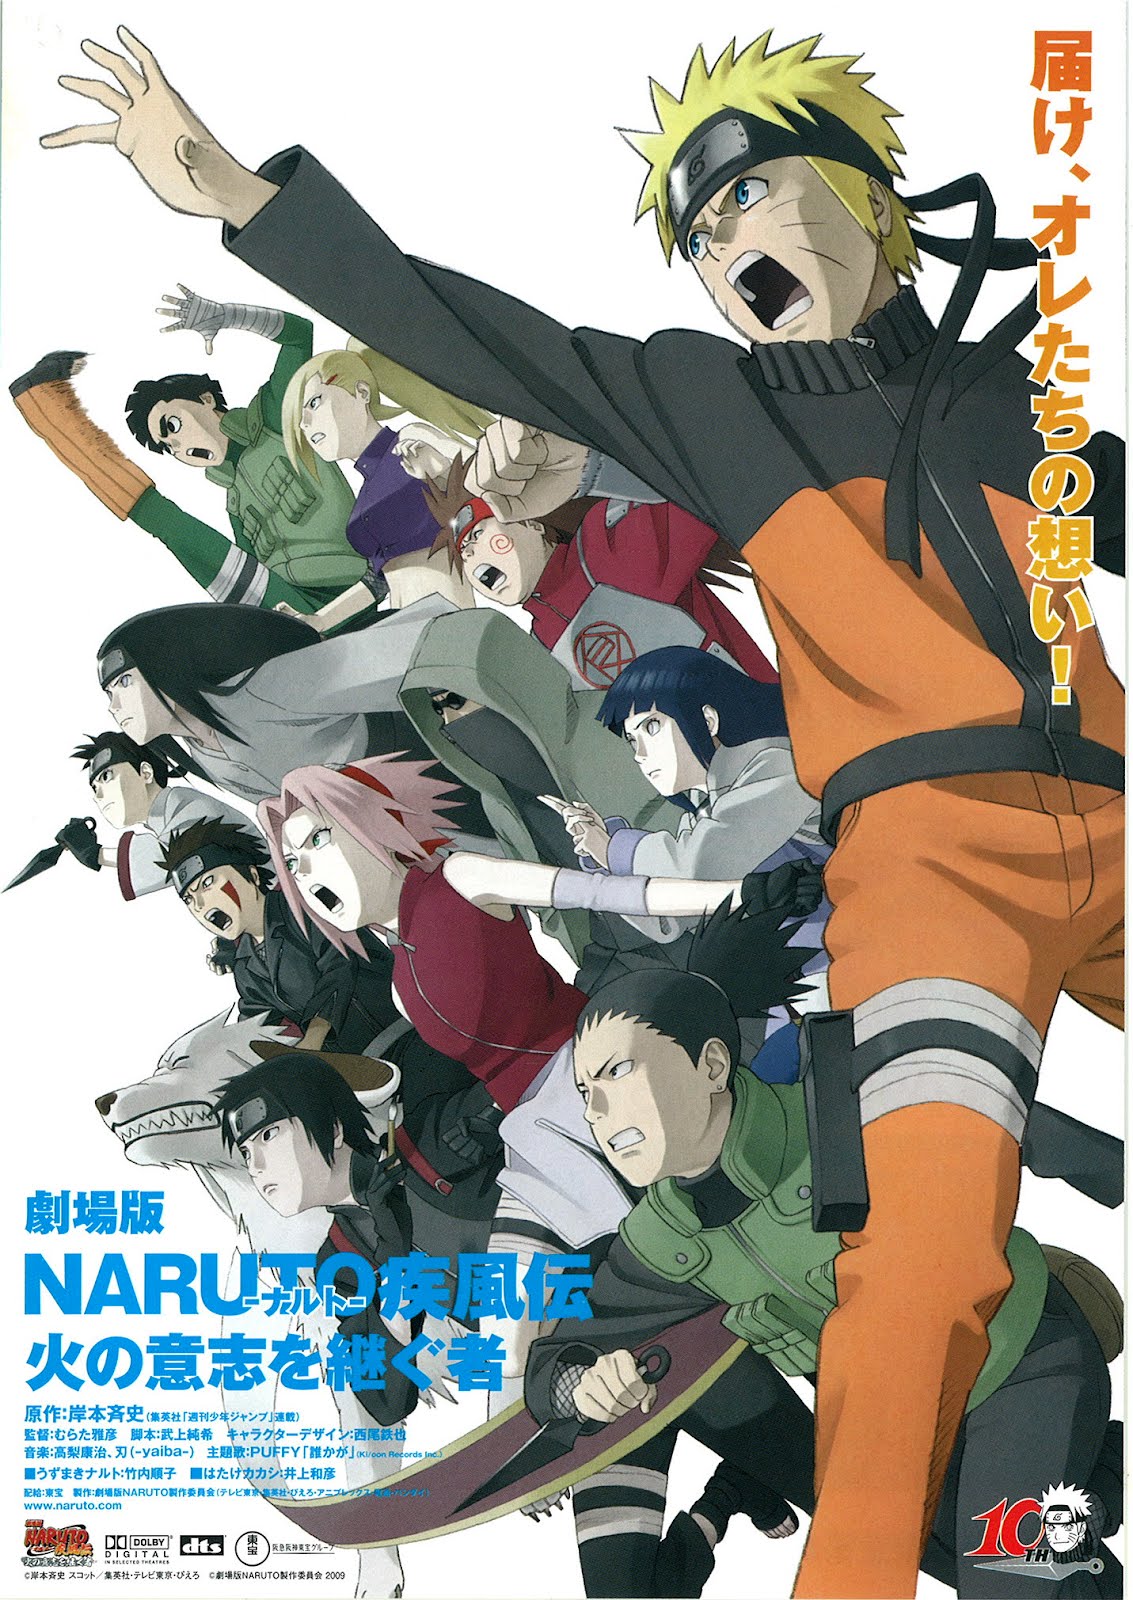 HD wallpaper: Naruto Shippuden Gaara poster, Naruto Shippuuden, anime,  Naruto (anime)